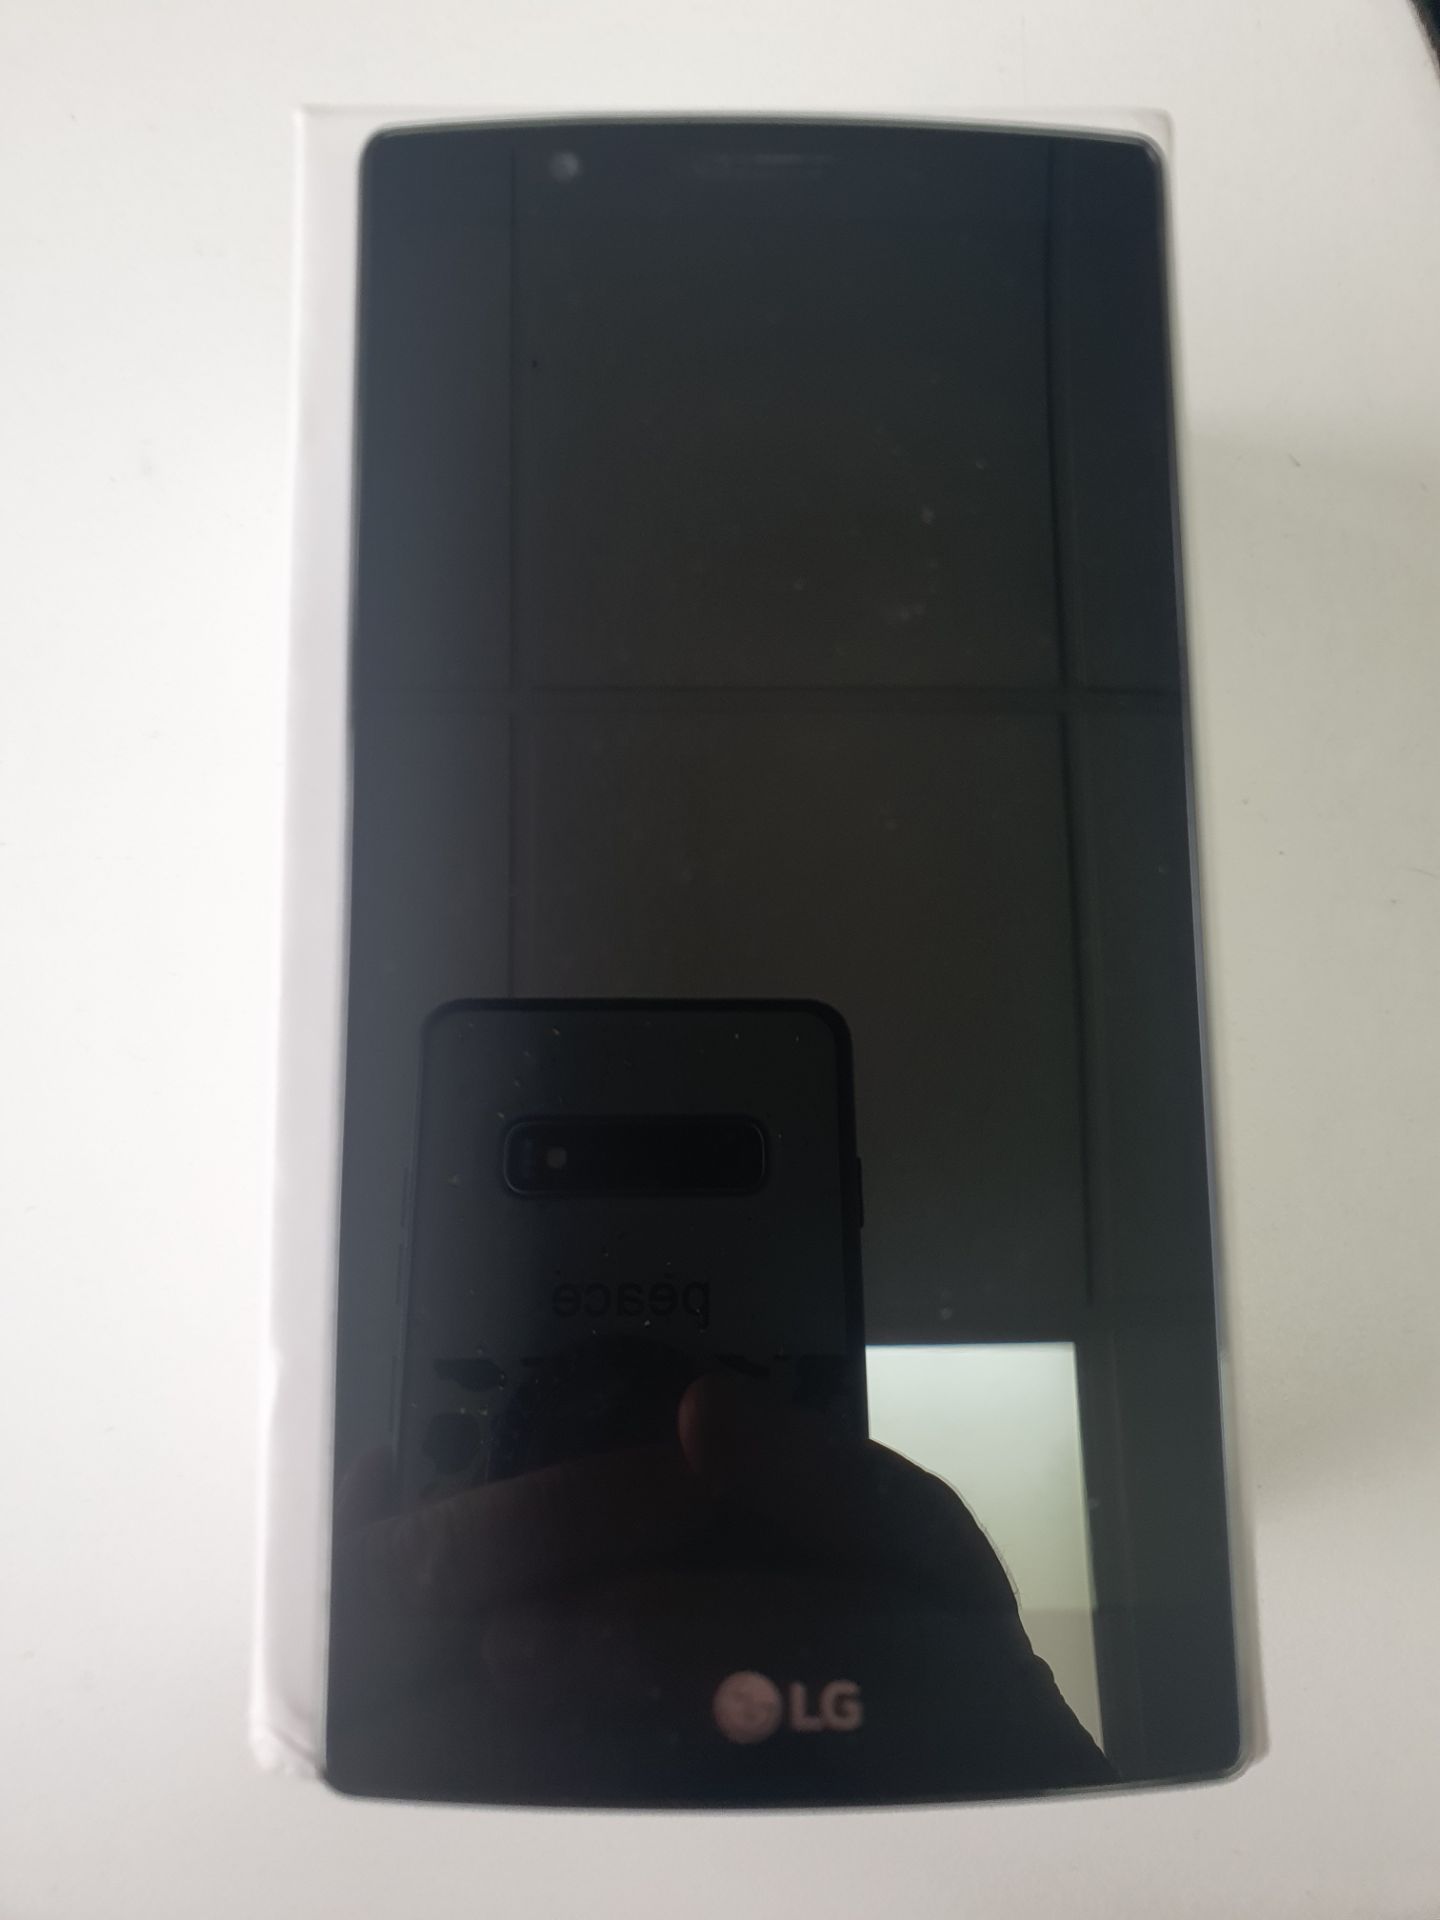 Ex-Display LG G4 Smartphone